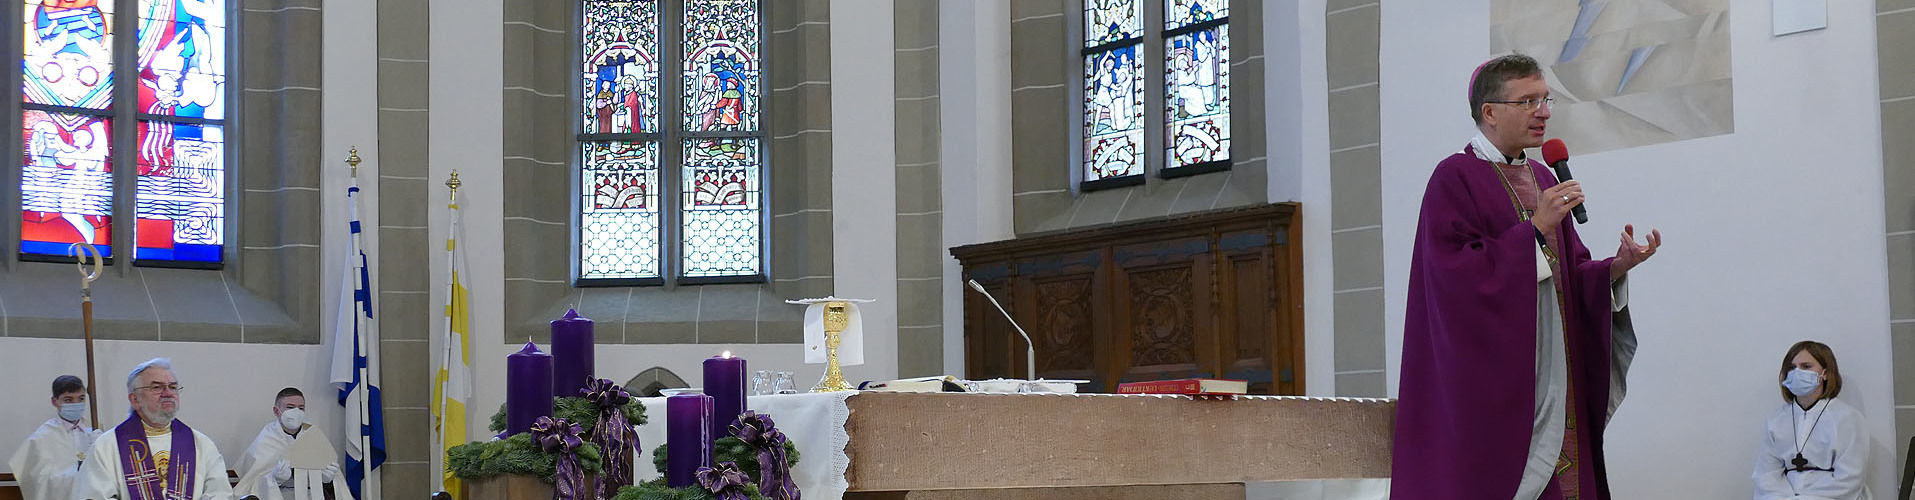 Bischof Dr. Michael Gerber besucht St. Crescentius